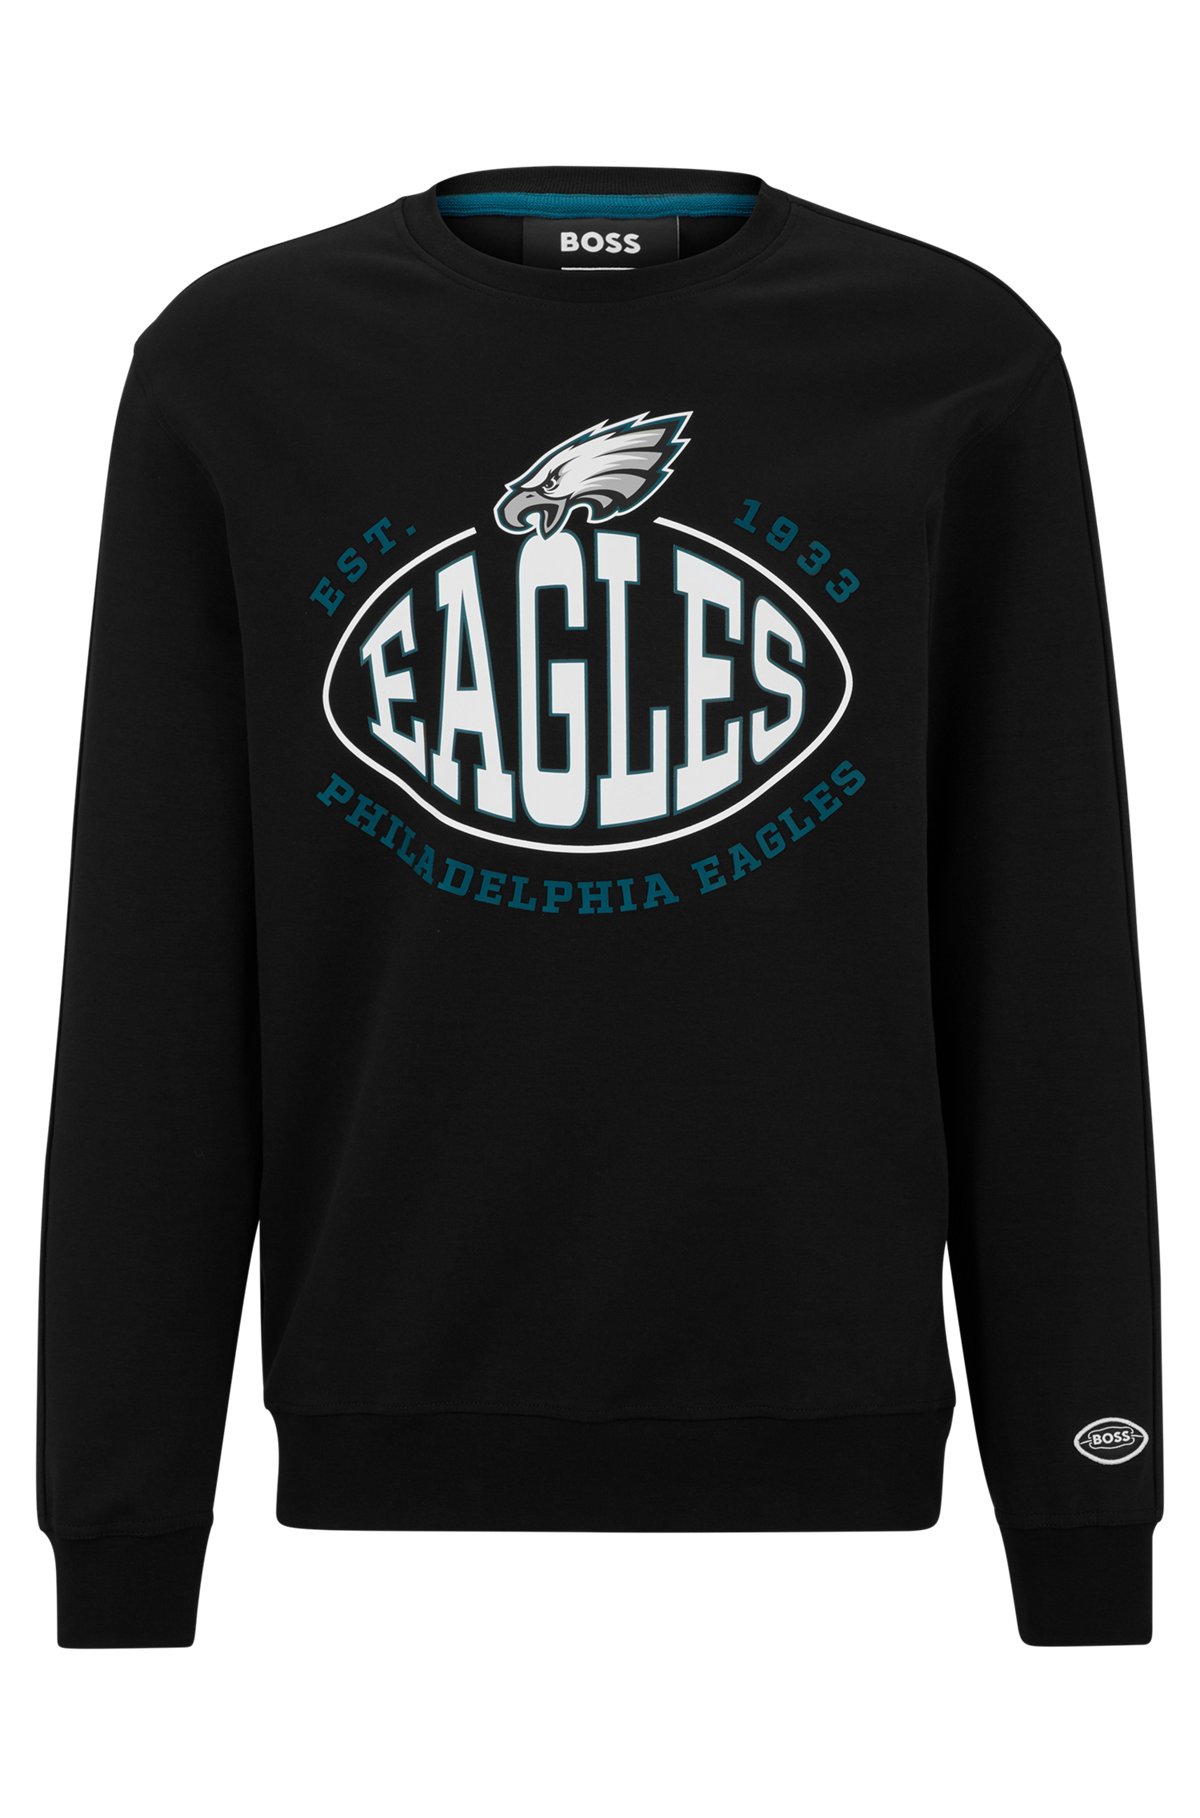 BOSS x NFL cotton-blend sweatshirt with collaborative branding, Eagles